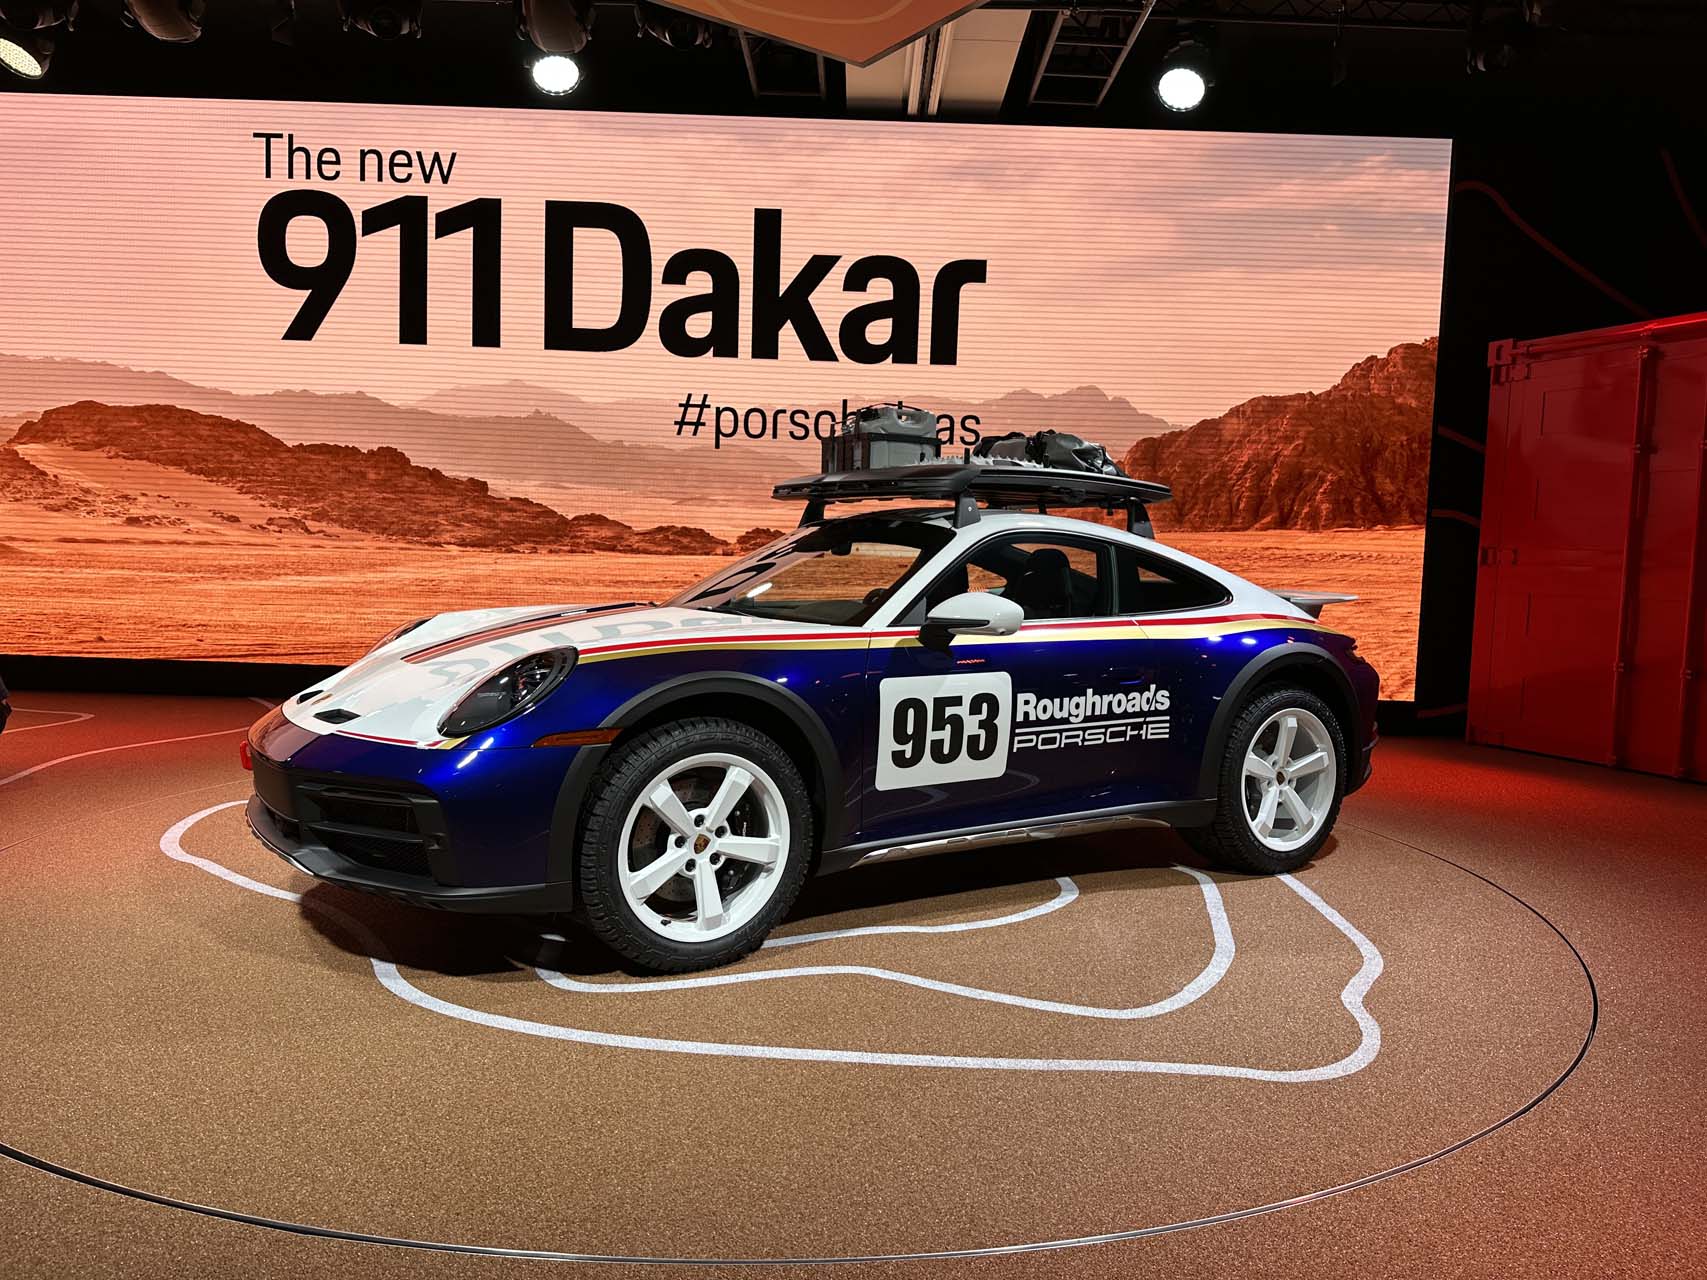 2023 Porsche 911 Dakar makes the offroad sports car mashup a reality